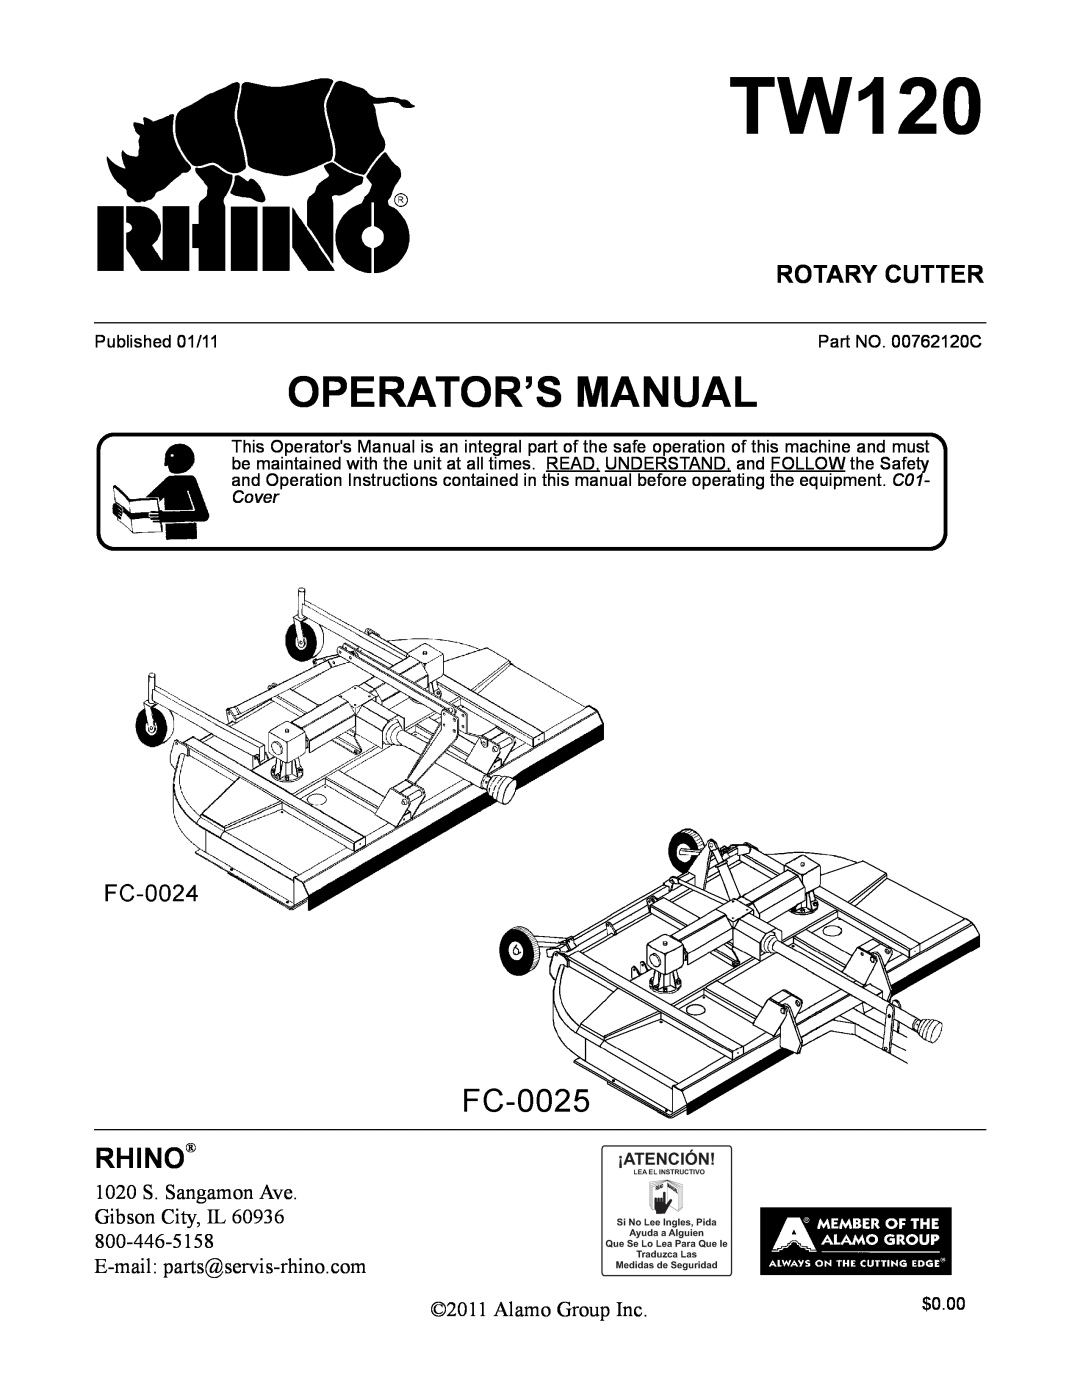 Blue Rhino FC-0025, FC-0024 manual TW120, Rhino, Rotary Cutter, Operator’S Manual 